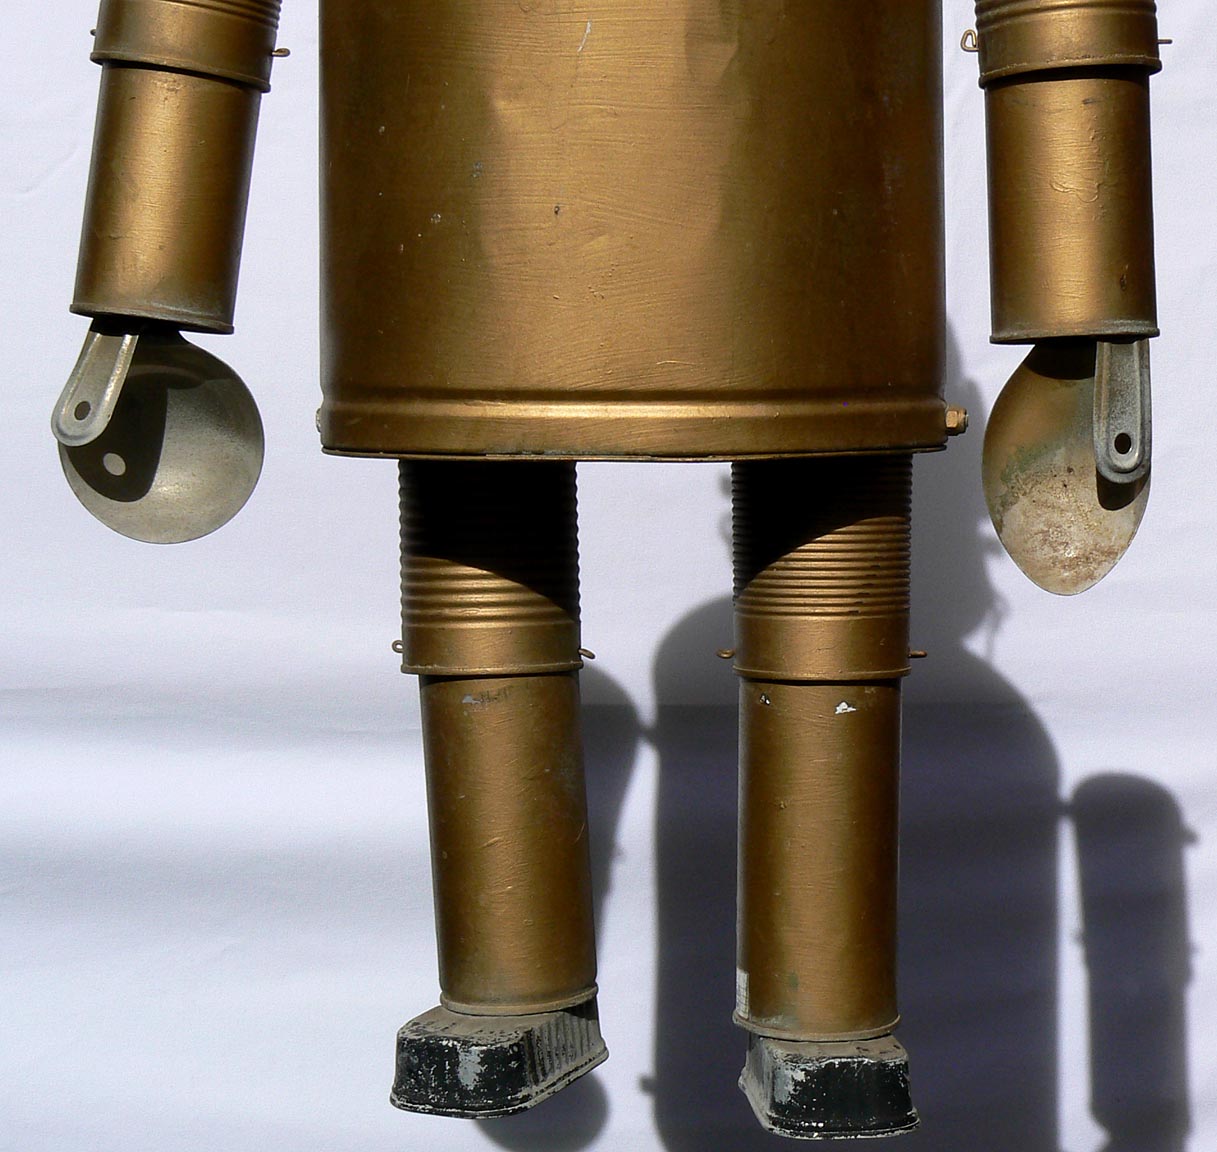 Folk art robot from found objects